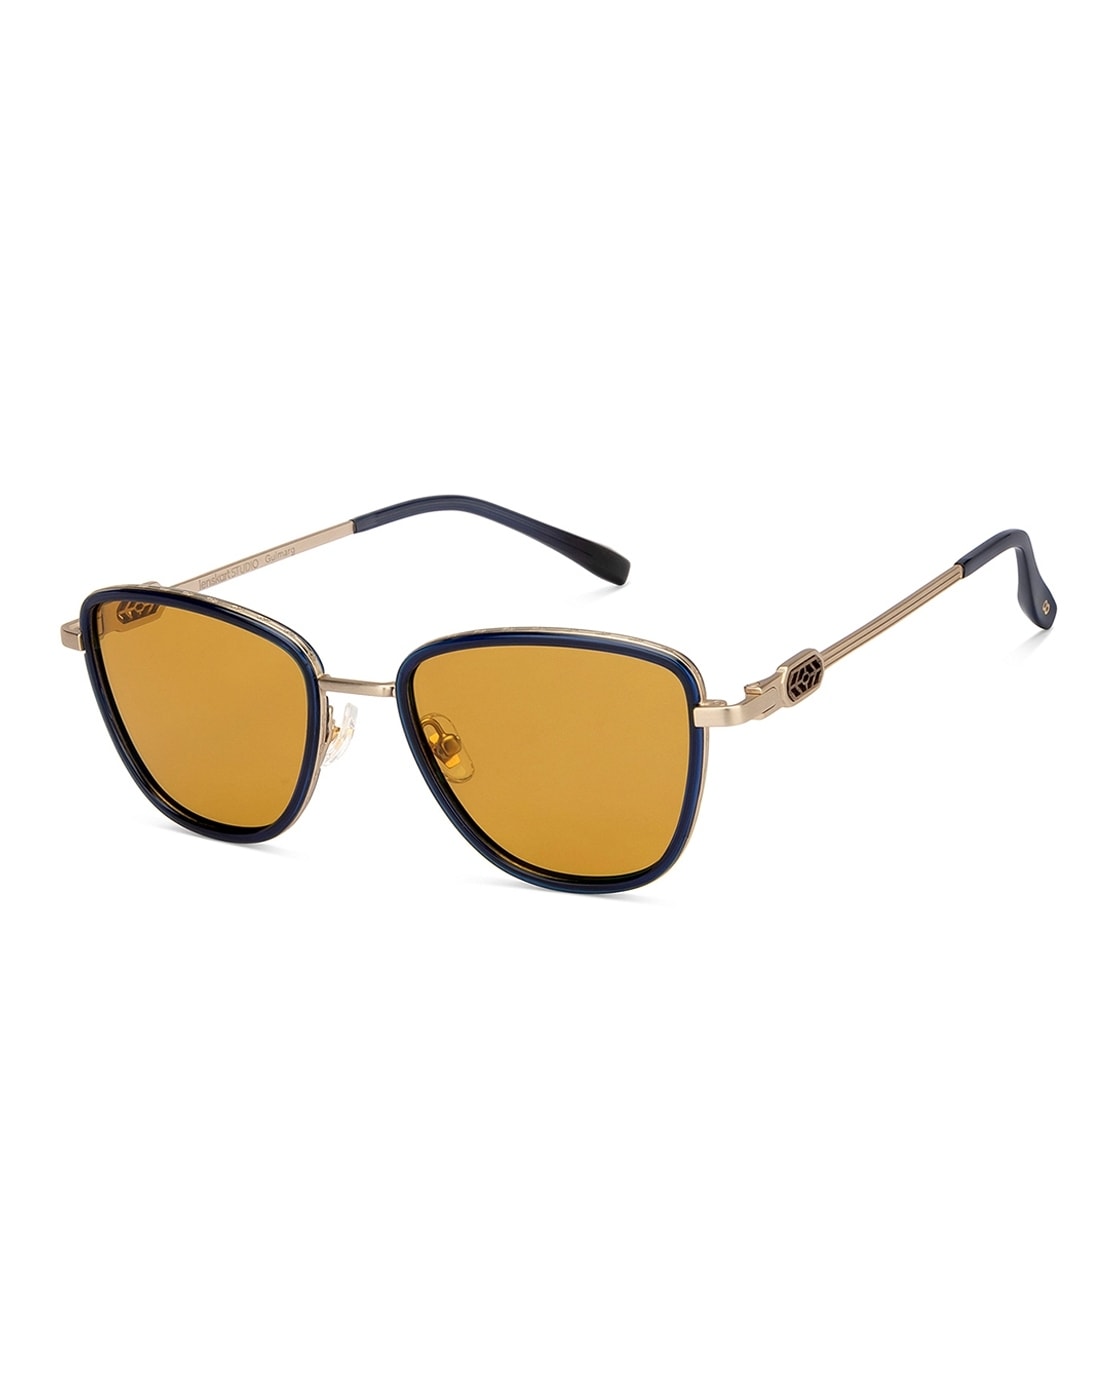 Buy Summer Sunglasses Online at Low Price - Lenskart